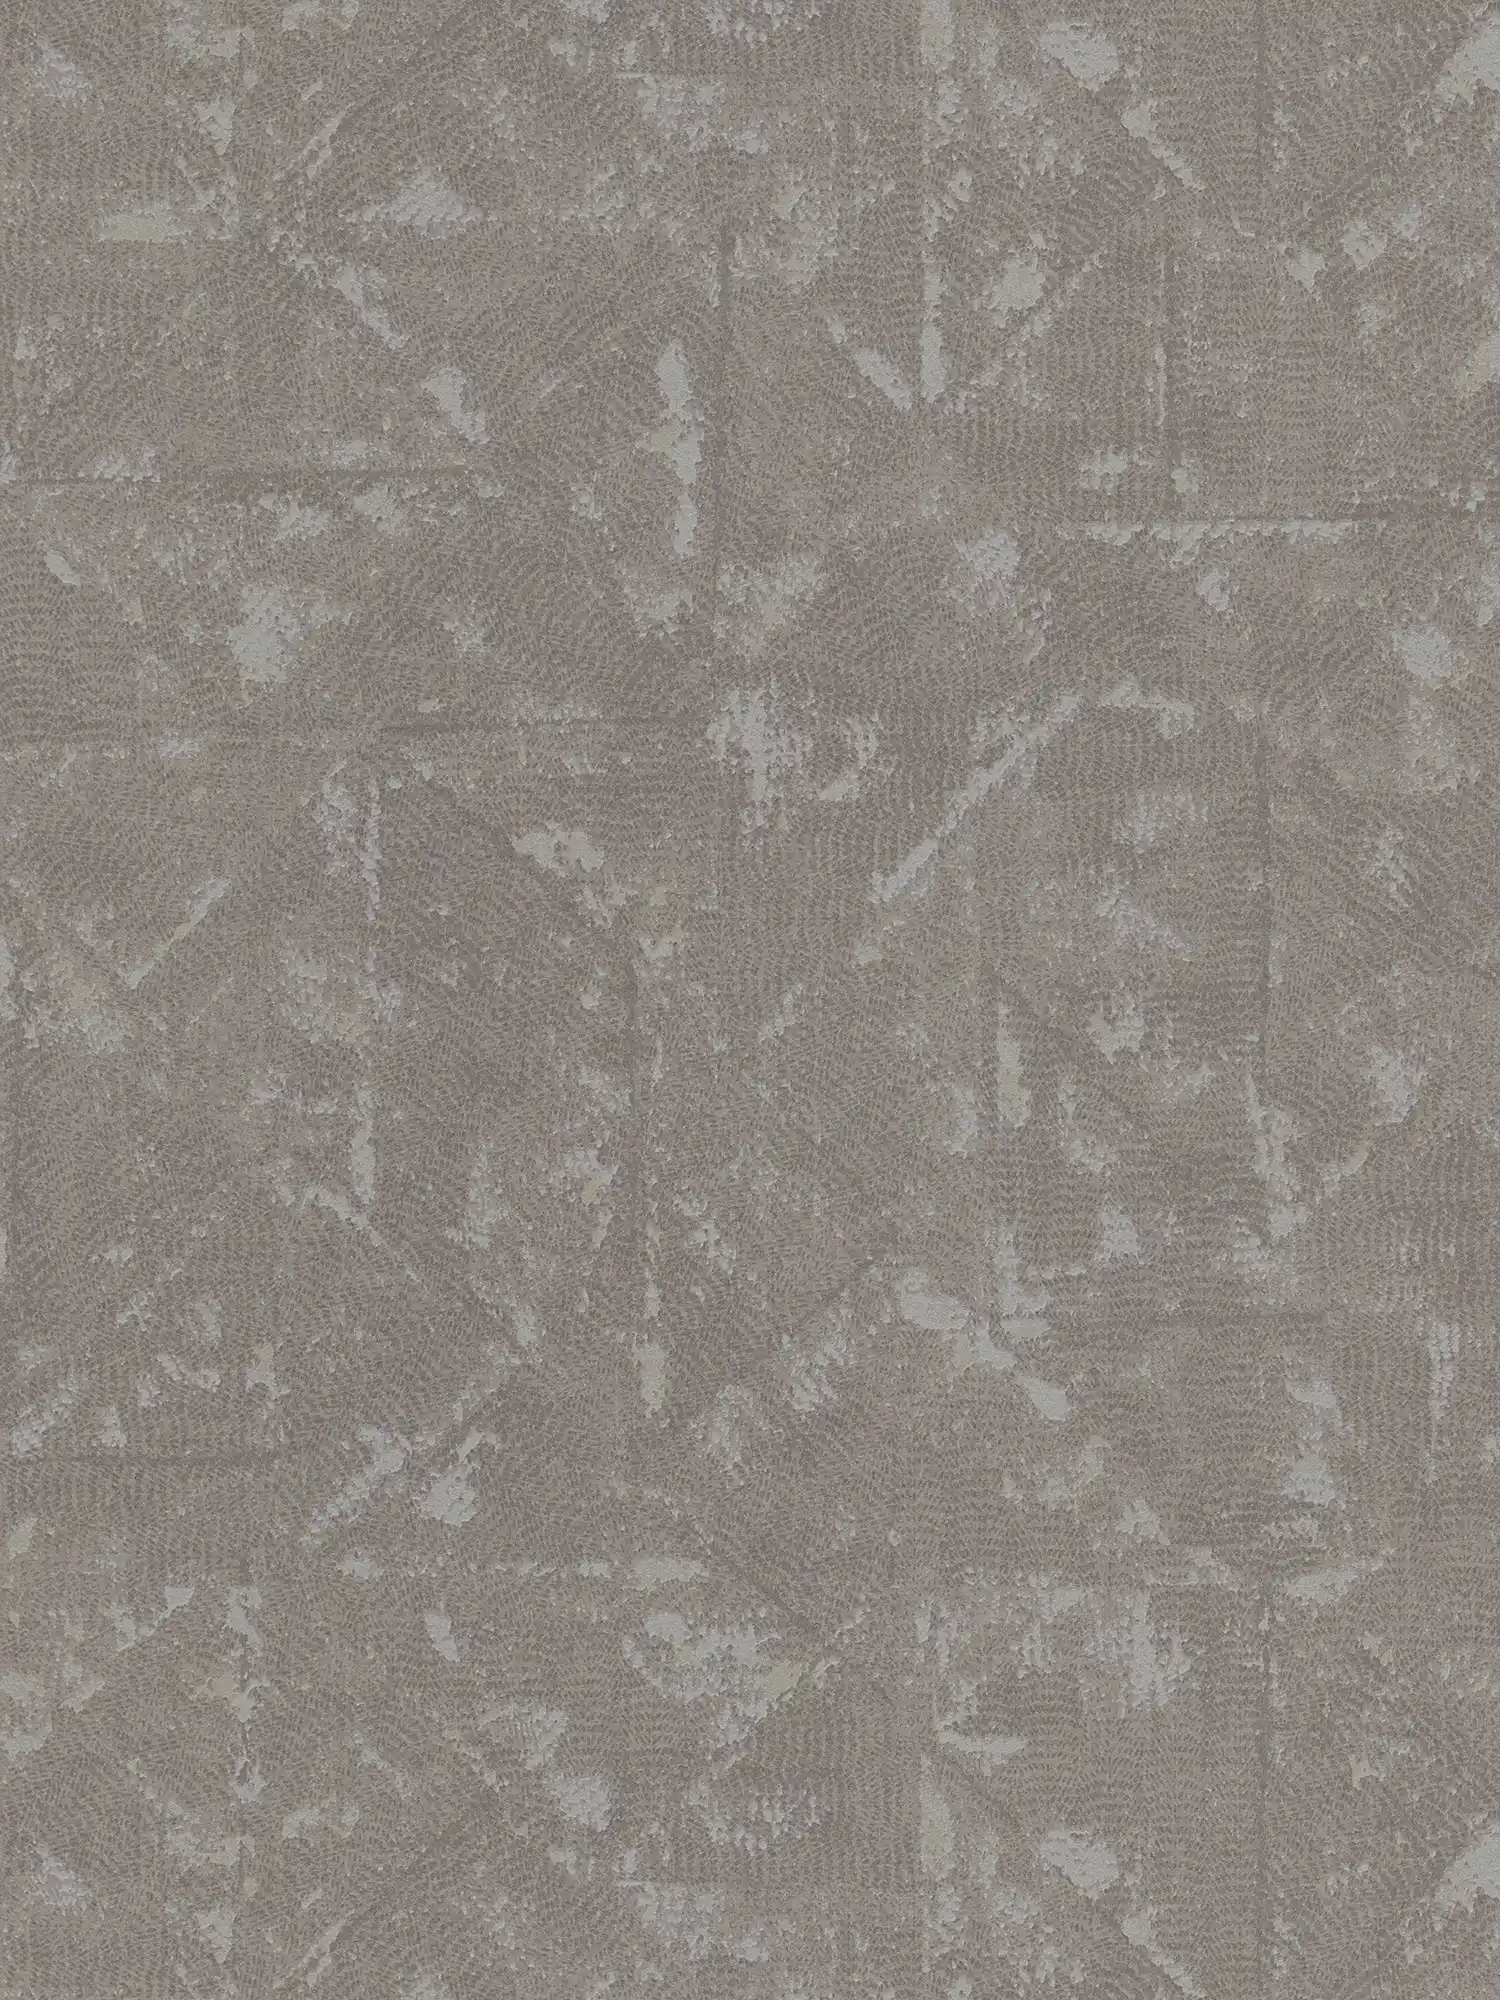 Papel pintado liso no tejido en gris, detalles asimétricos - gris, plata
